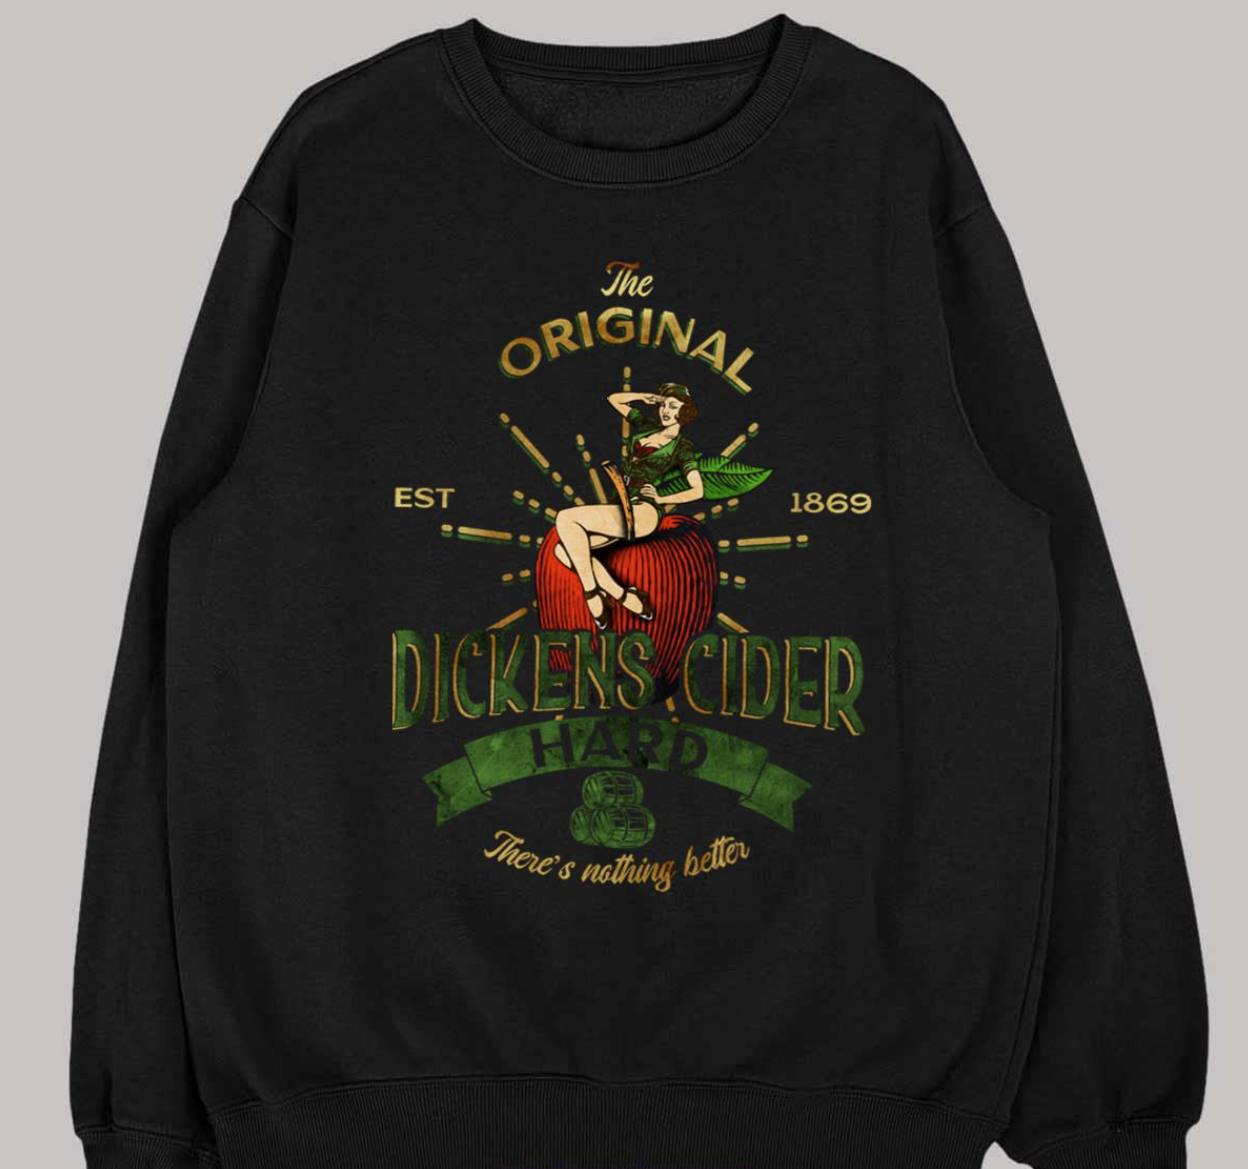 The Original Hard Dickens Cider shirt